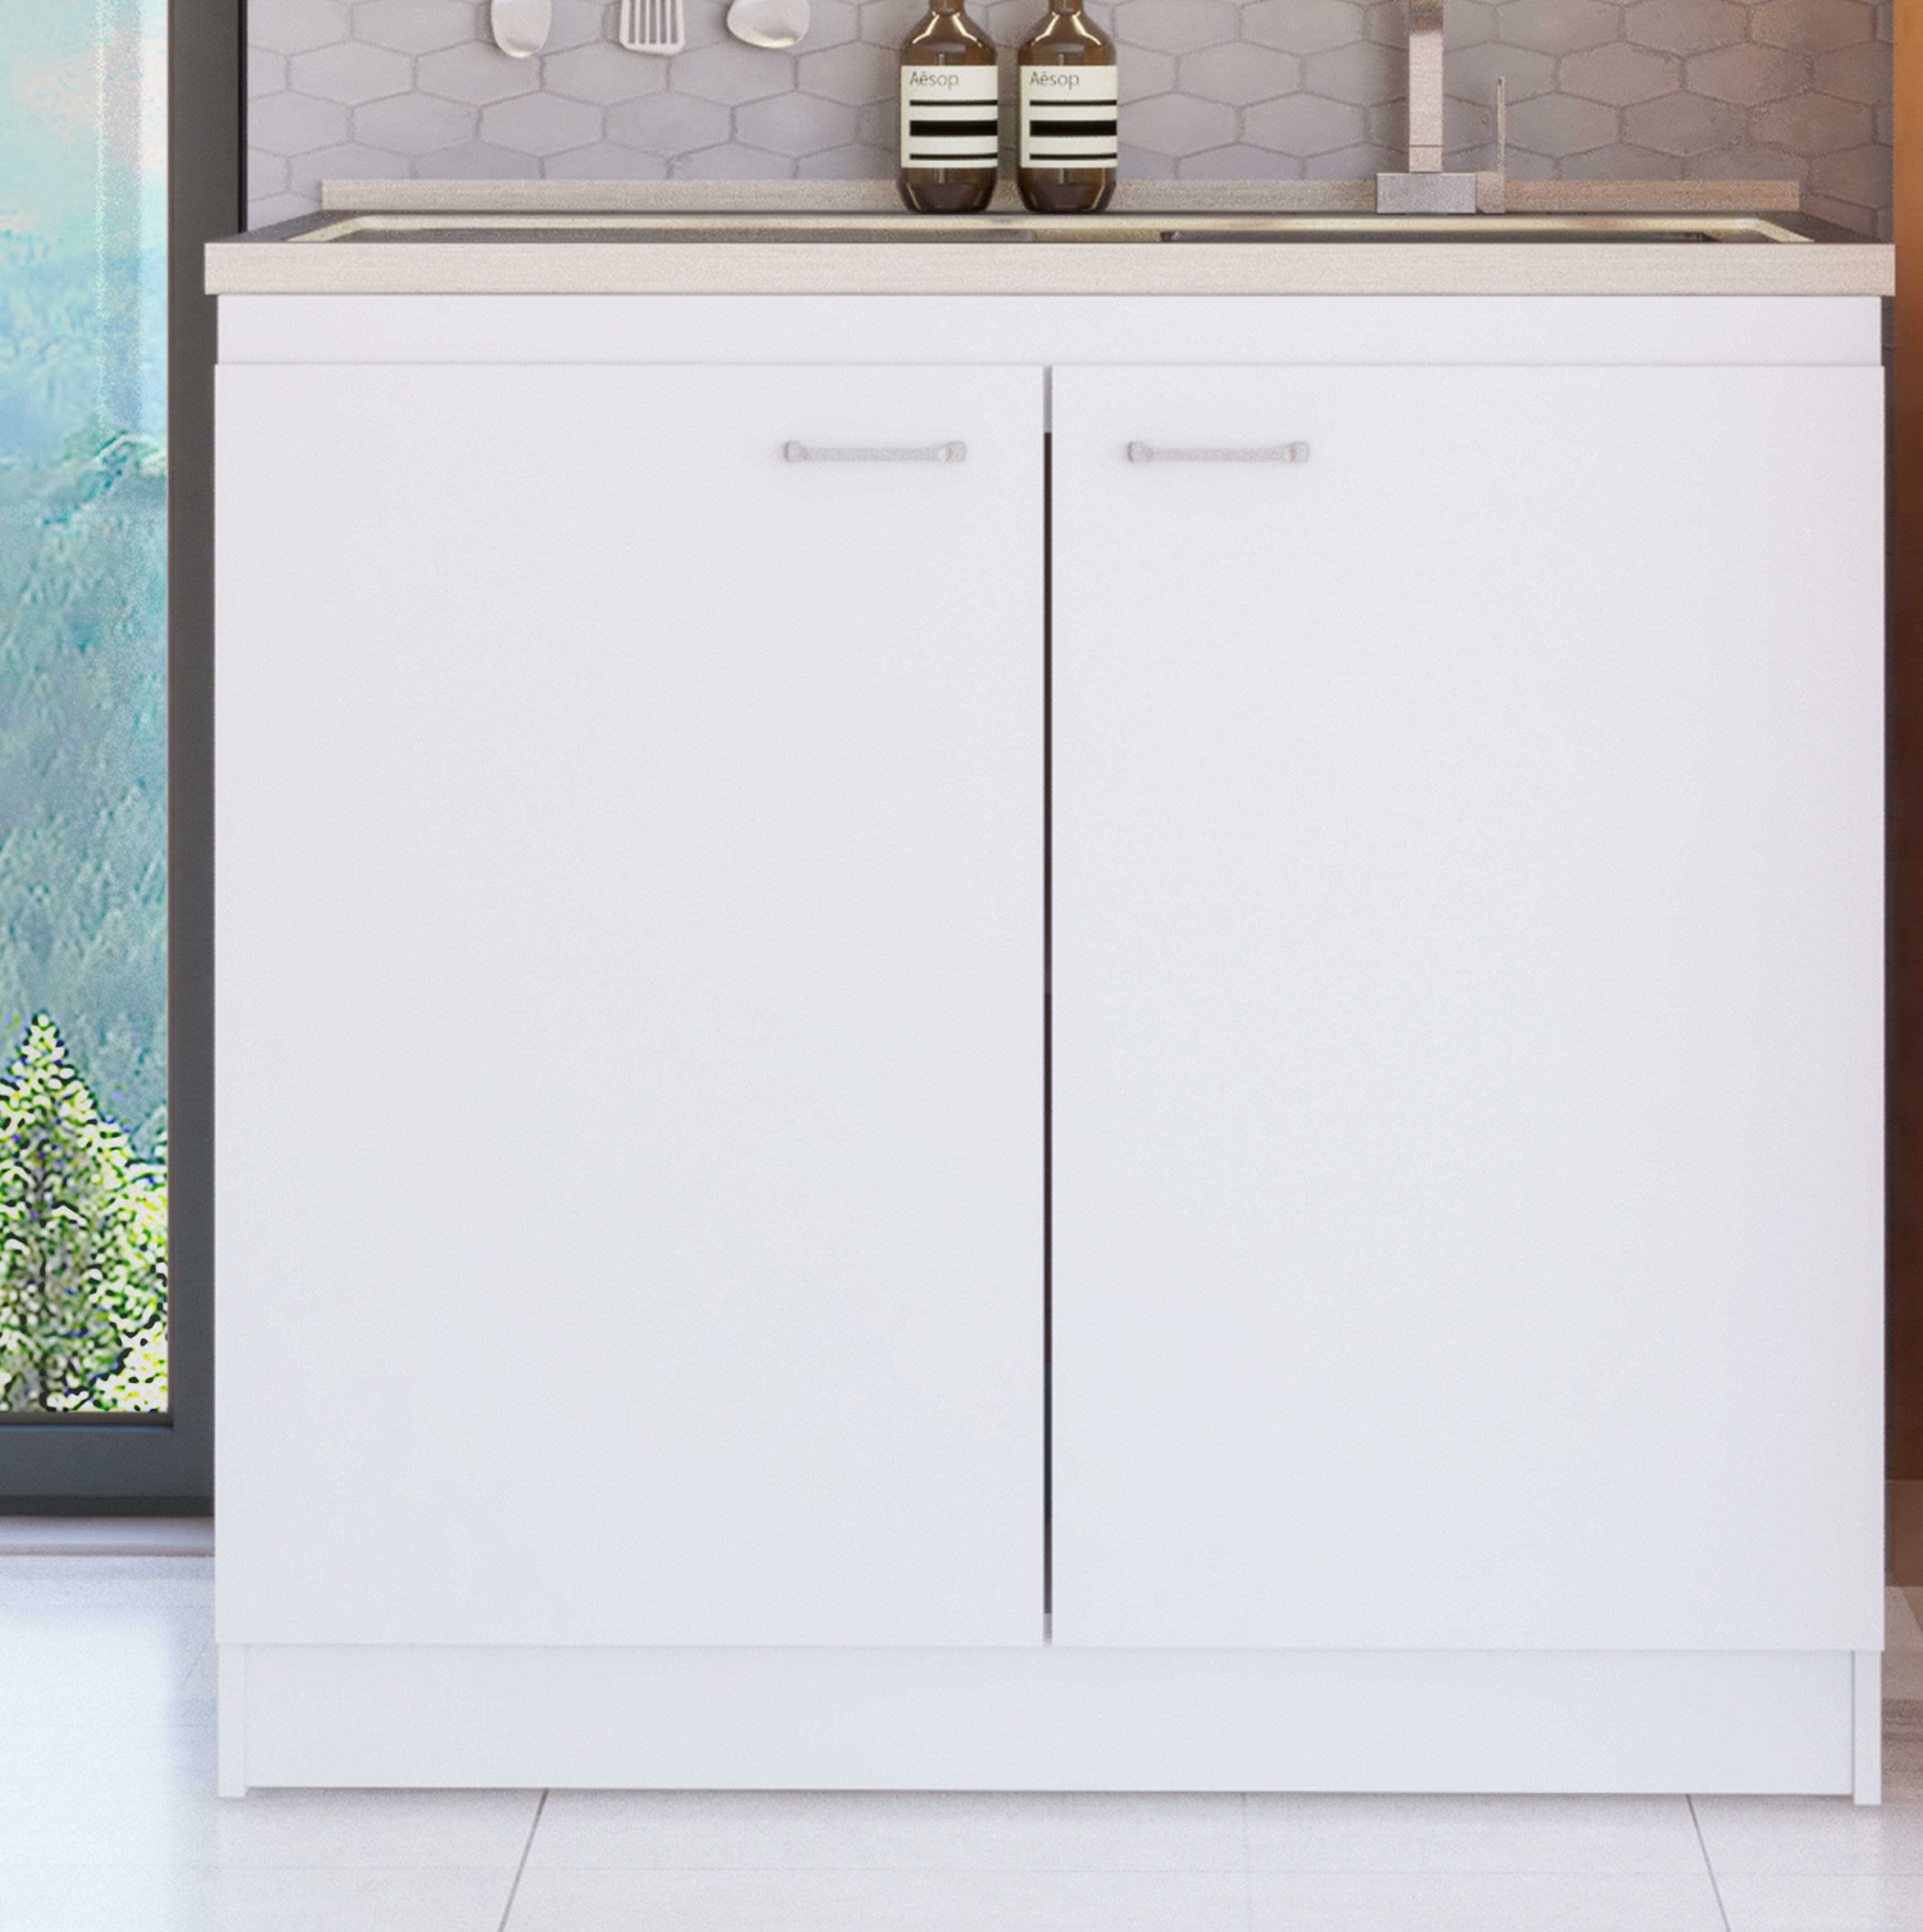 Ebay White Kitchen Cabinets - Amazon Com White Kitchen Cabinets / Buy ...